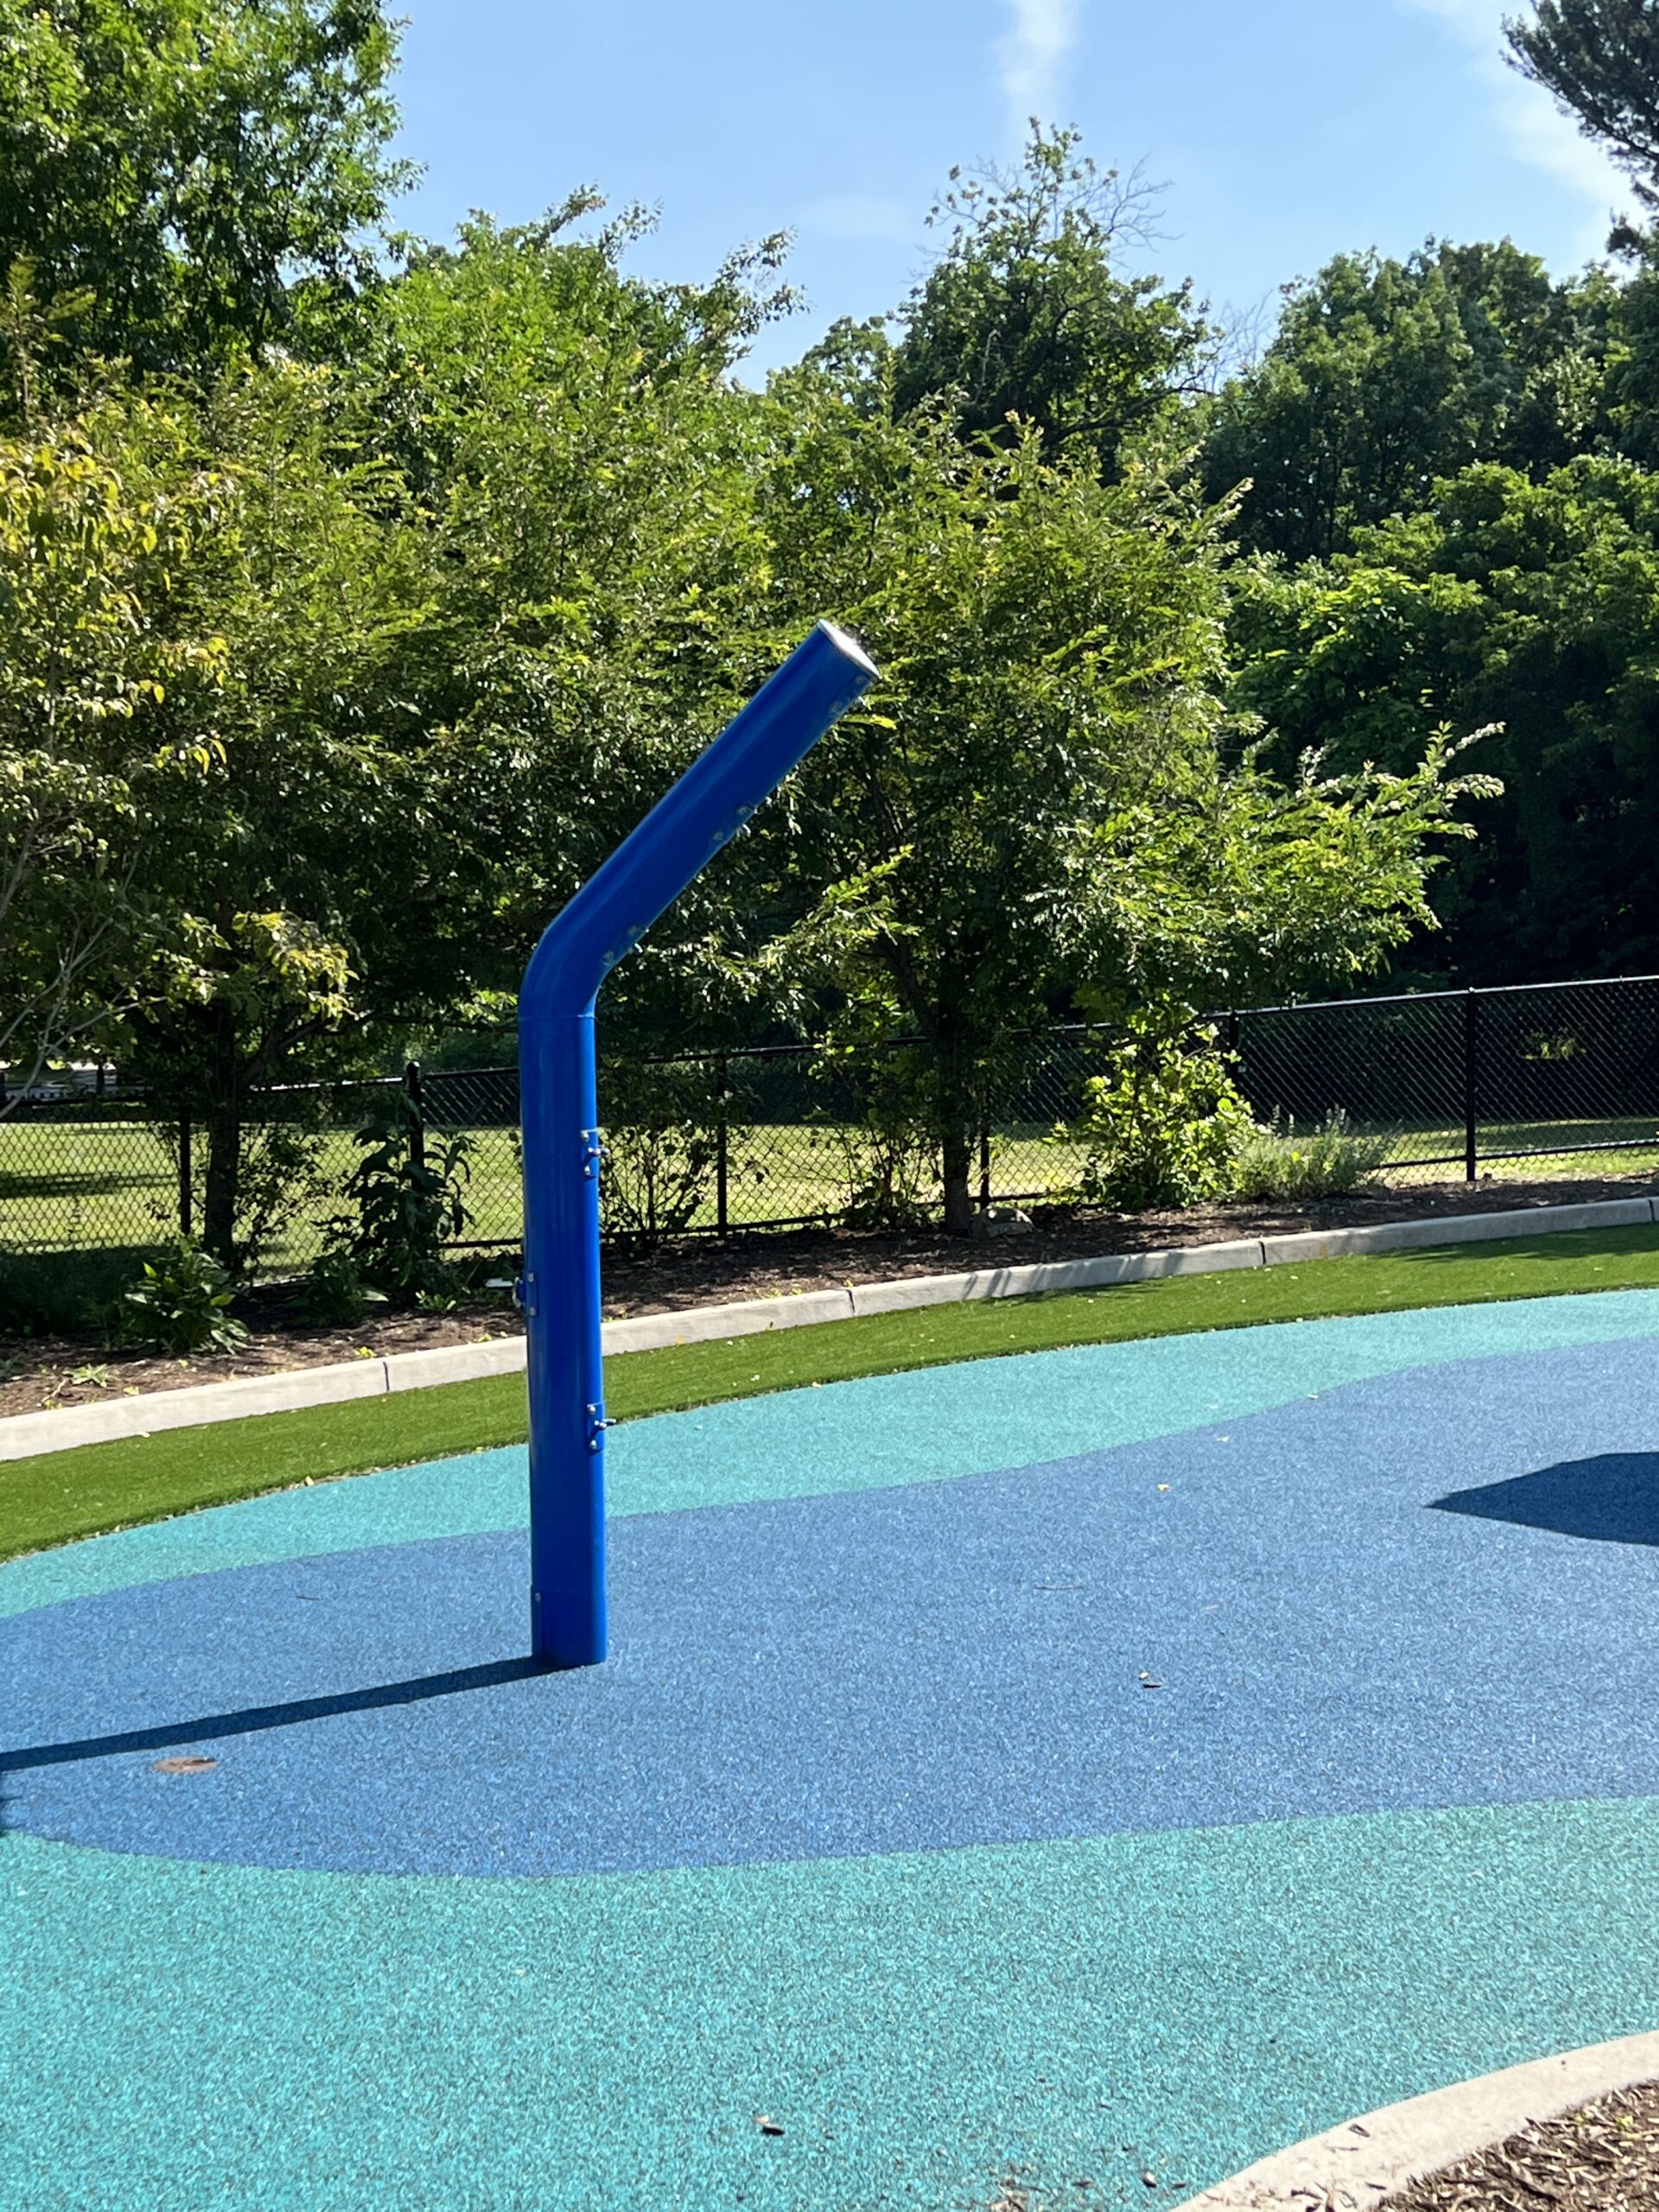 Verona Park Playground in Verona NJ - Features - mister